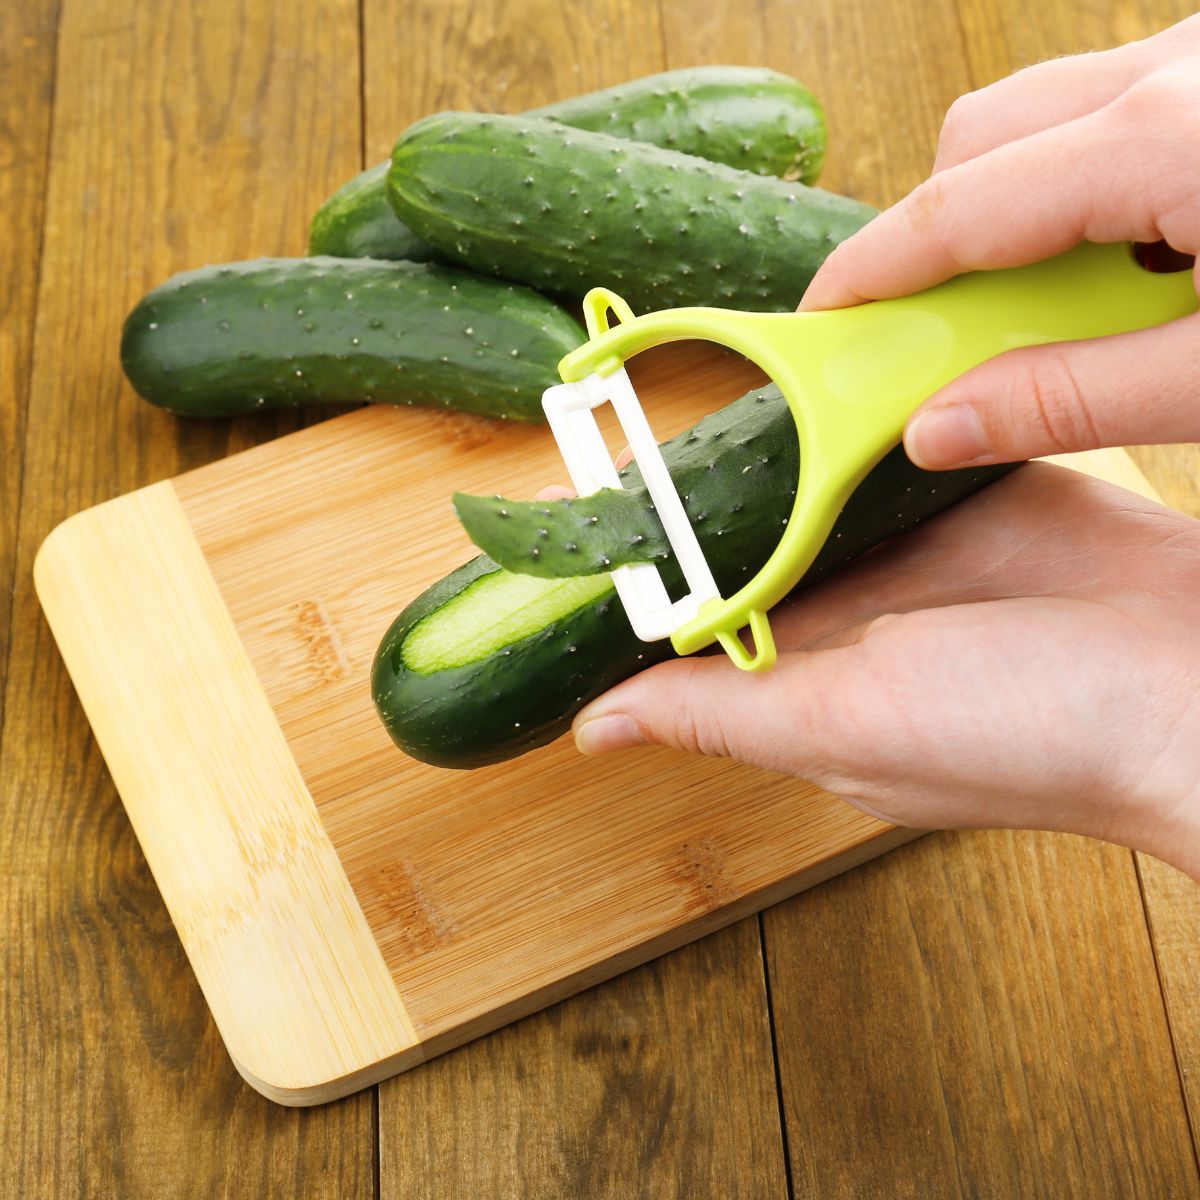 Peeling cucumber with a vegetable peeler